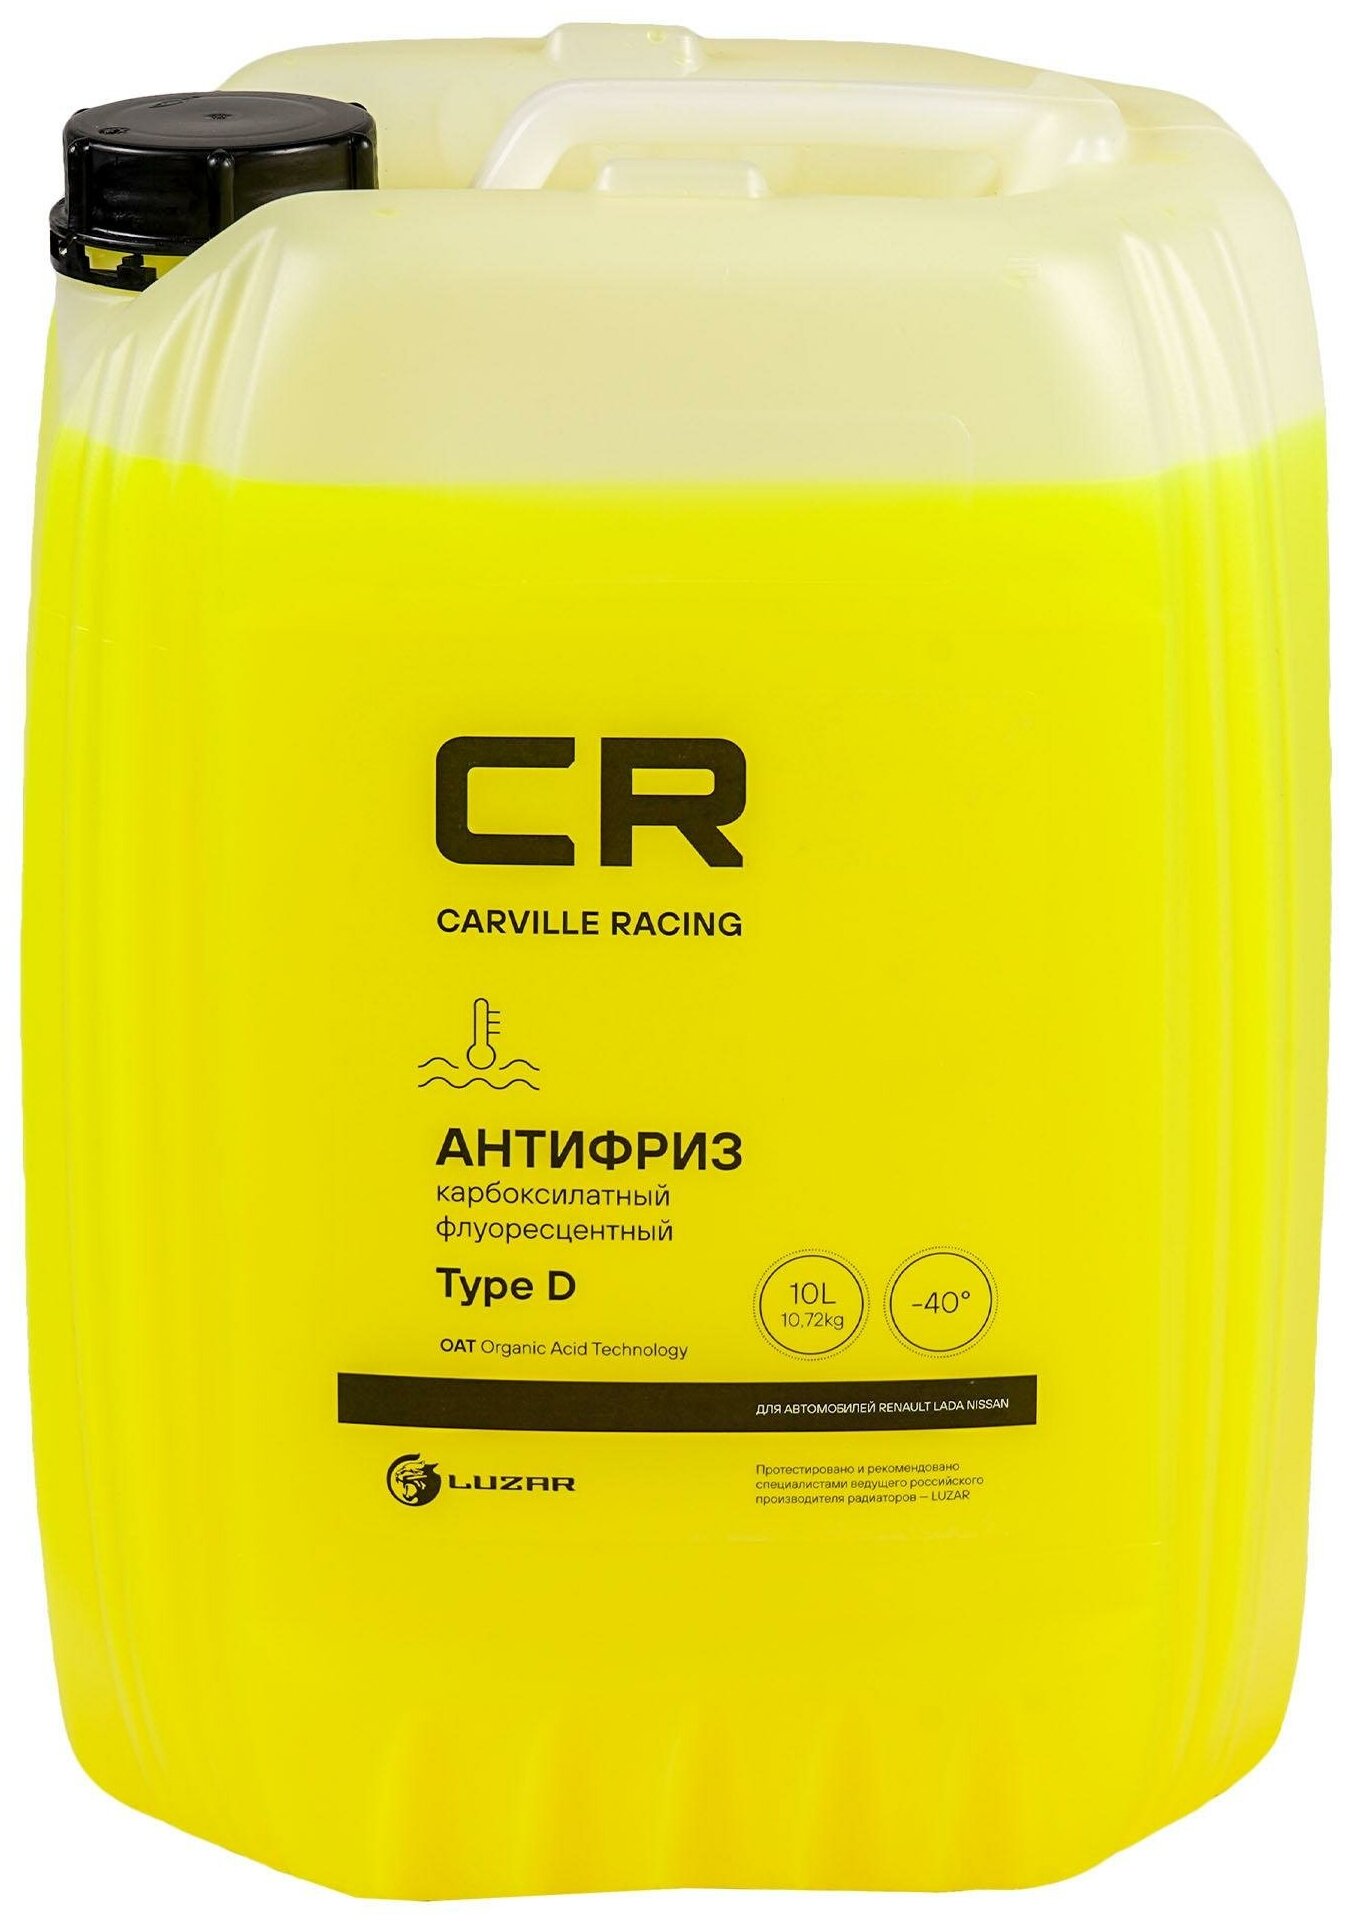 Carville racing антифриз cr для ам renault (лада, nissan), type d, флуор. -40с, желтый, готовый, 10л10.74кг (l201 l2018537